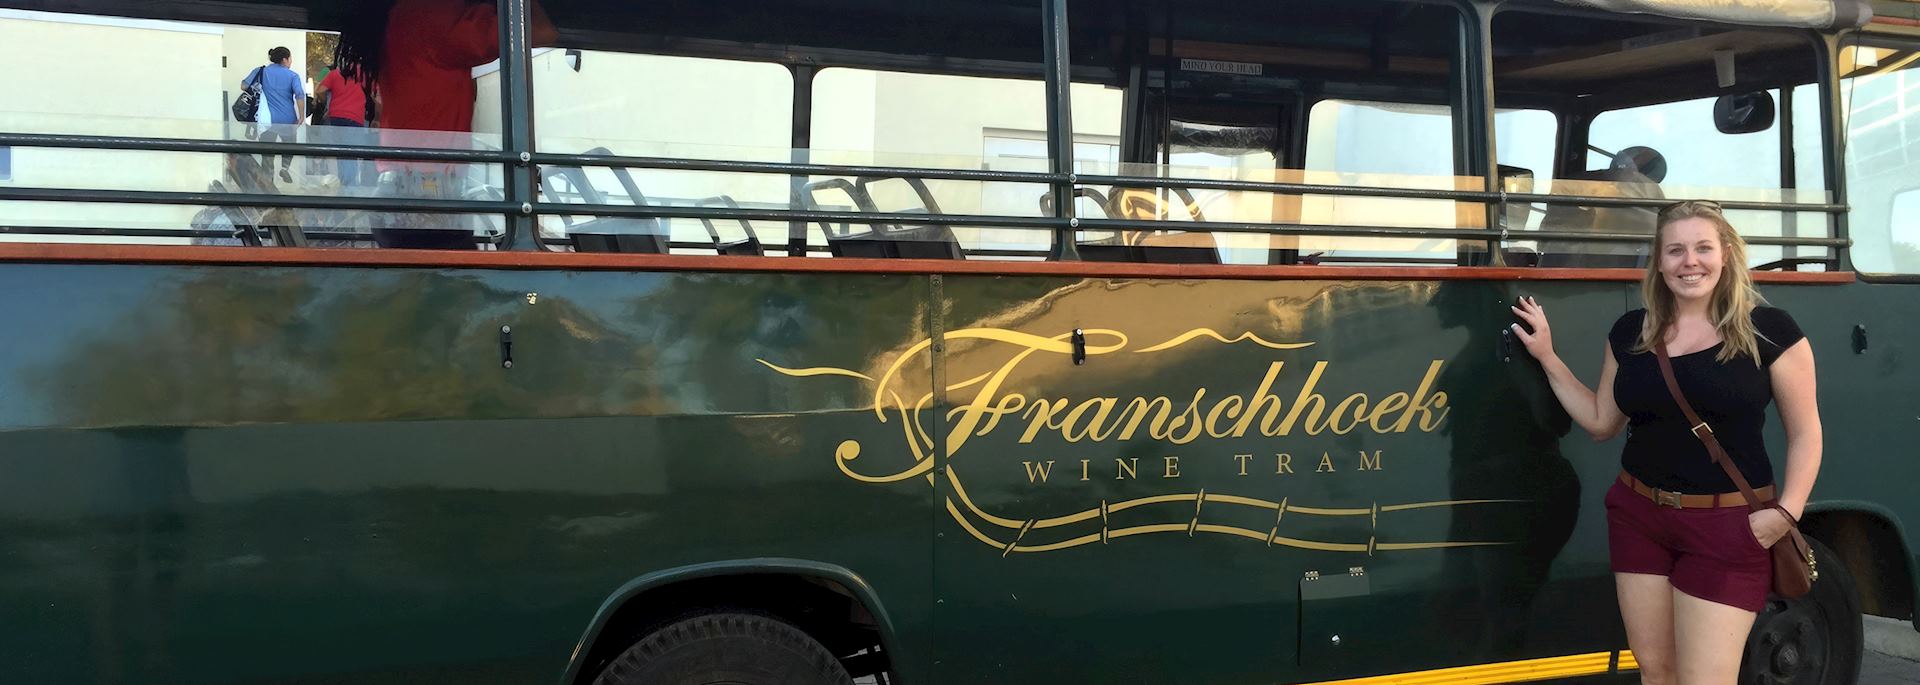 Sophie enjoying the Franschhoek Wine Tram tour, South Africa